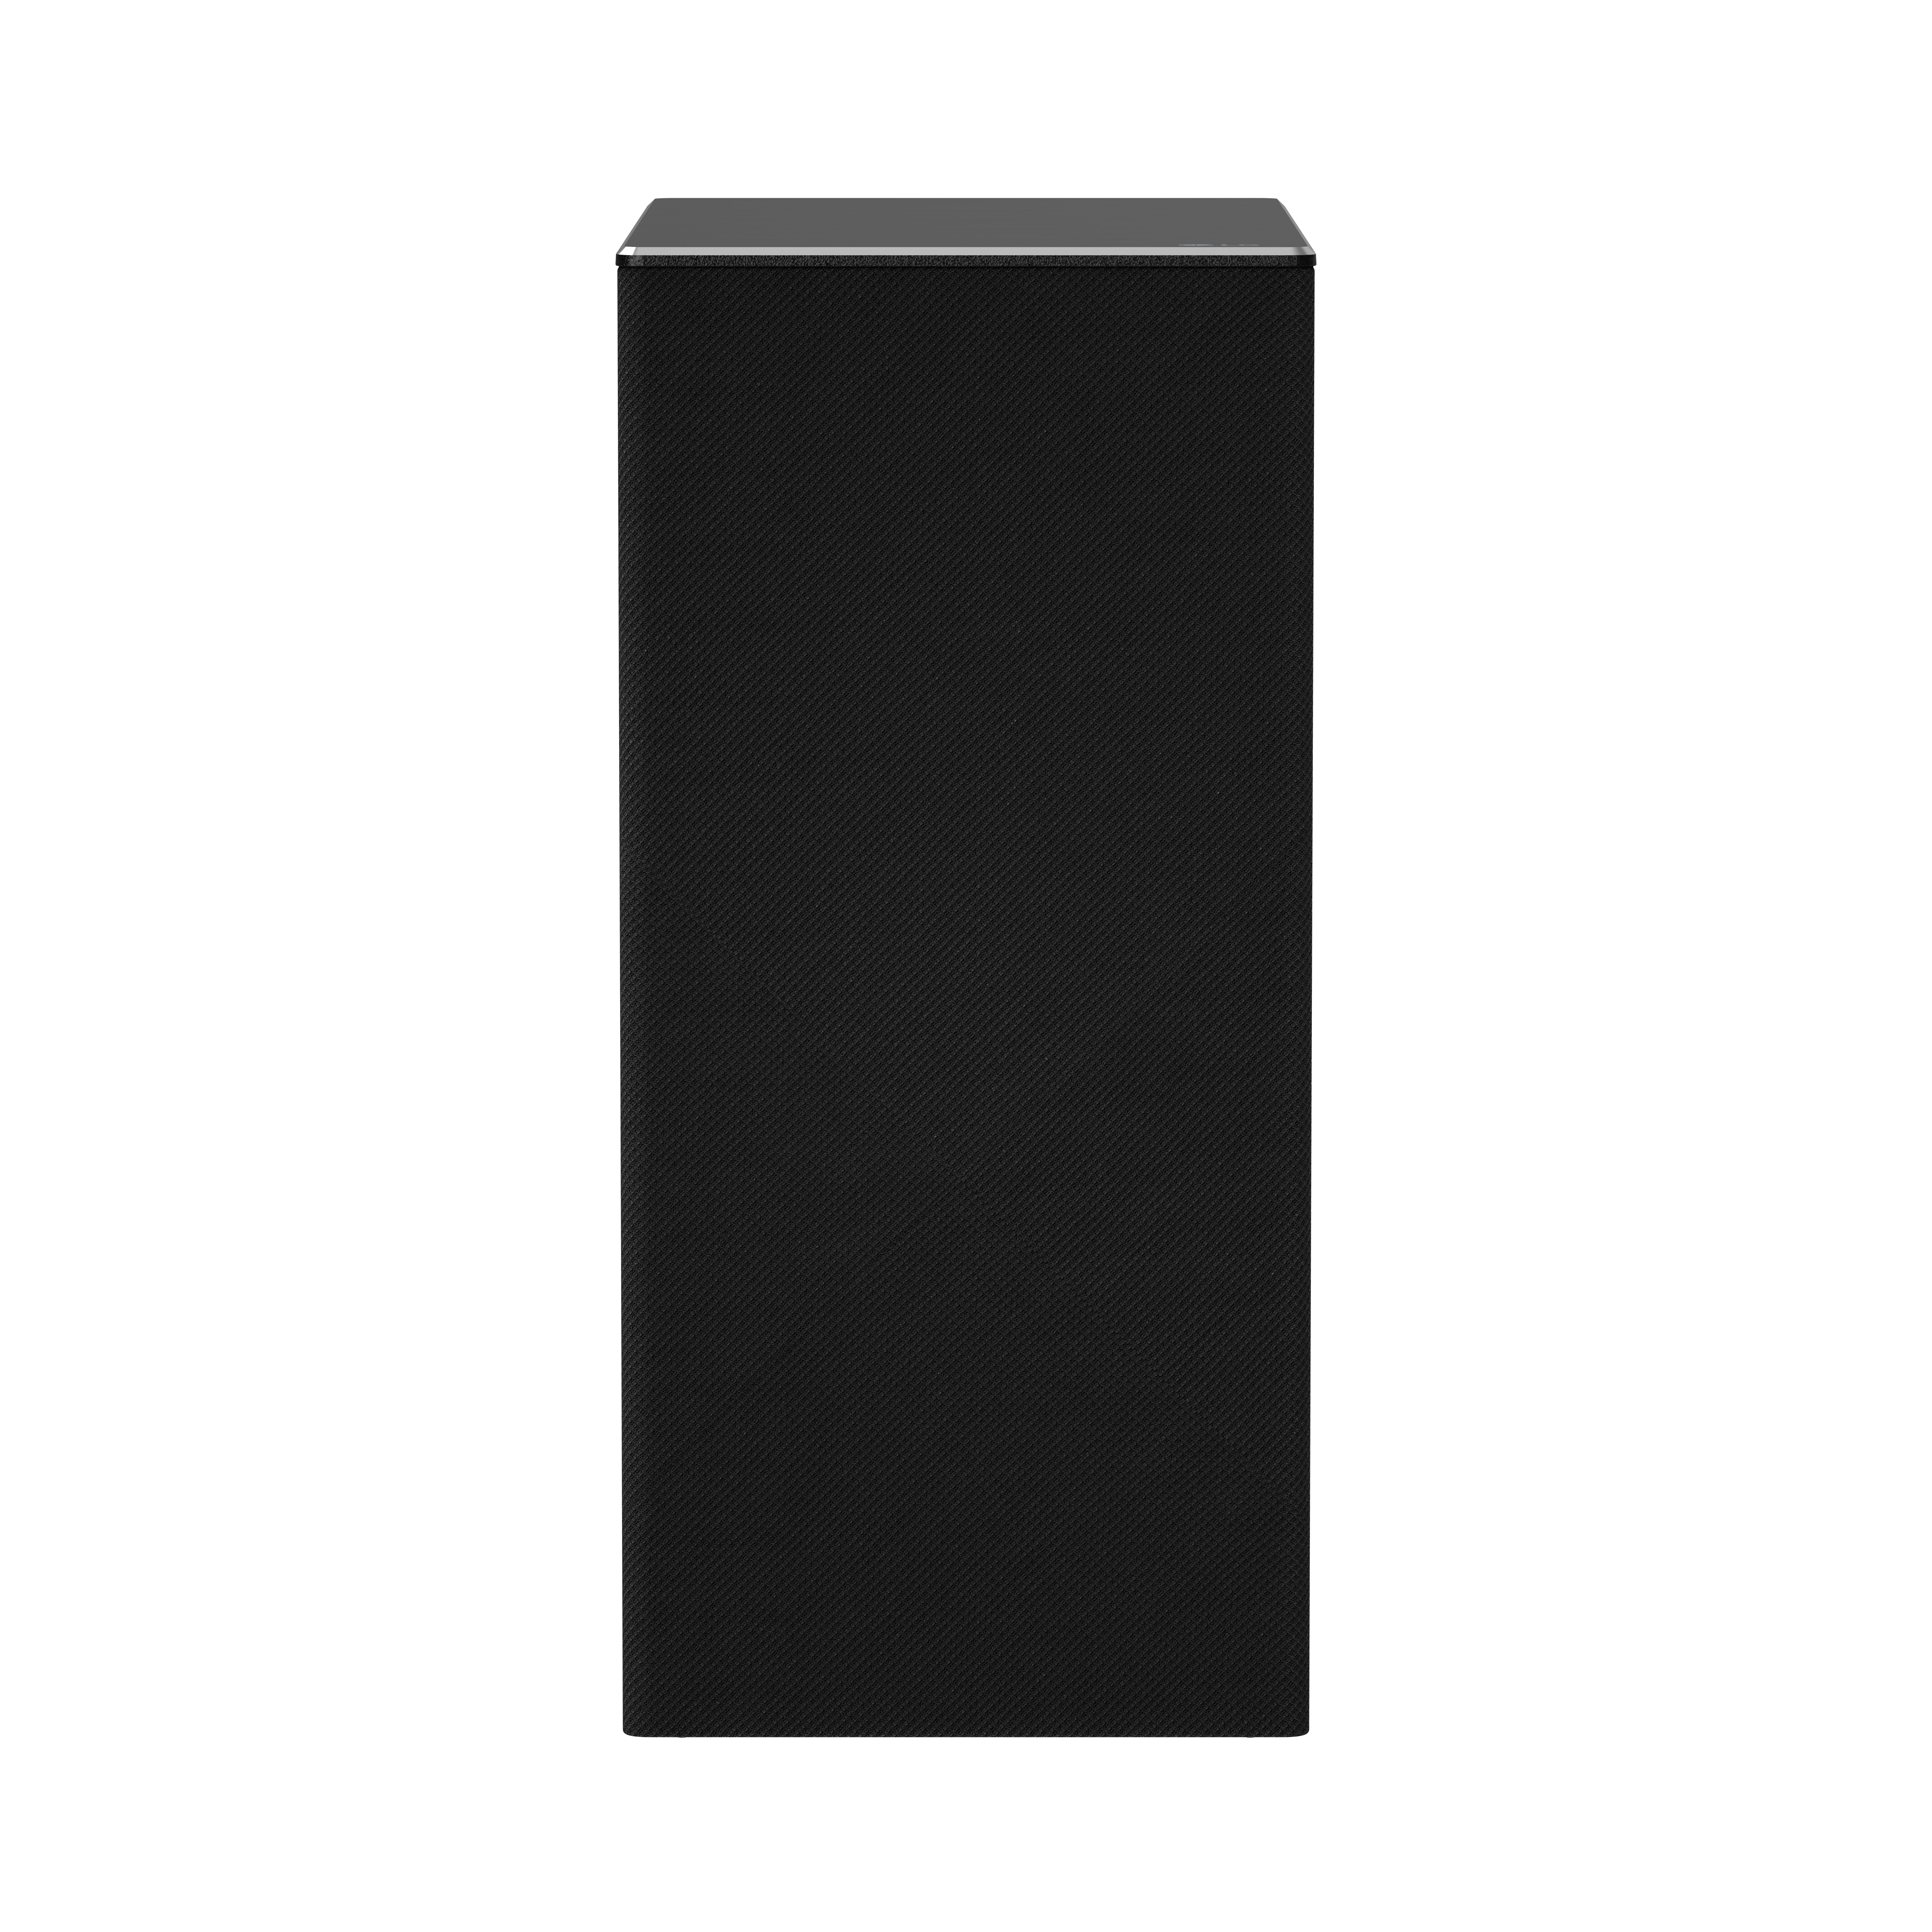 LG G1.DEUSLLK Soundbar-Lautsprecher Schwarz 3.1 Kanäle 360 W